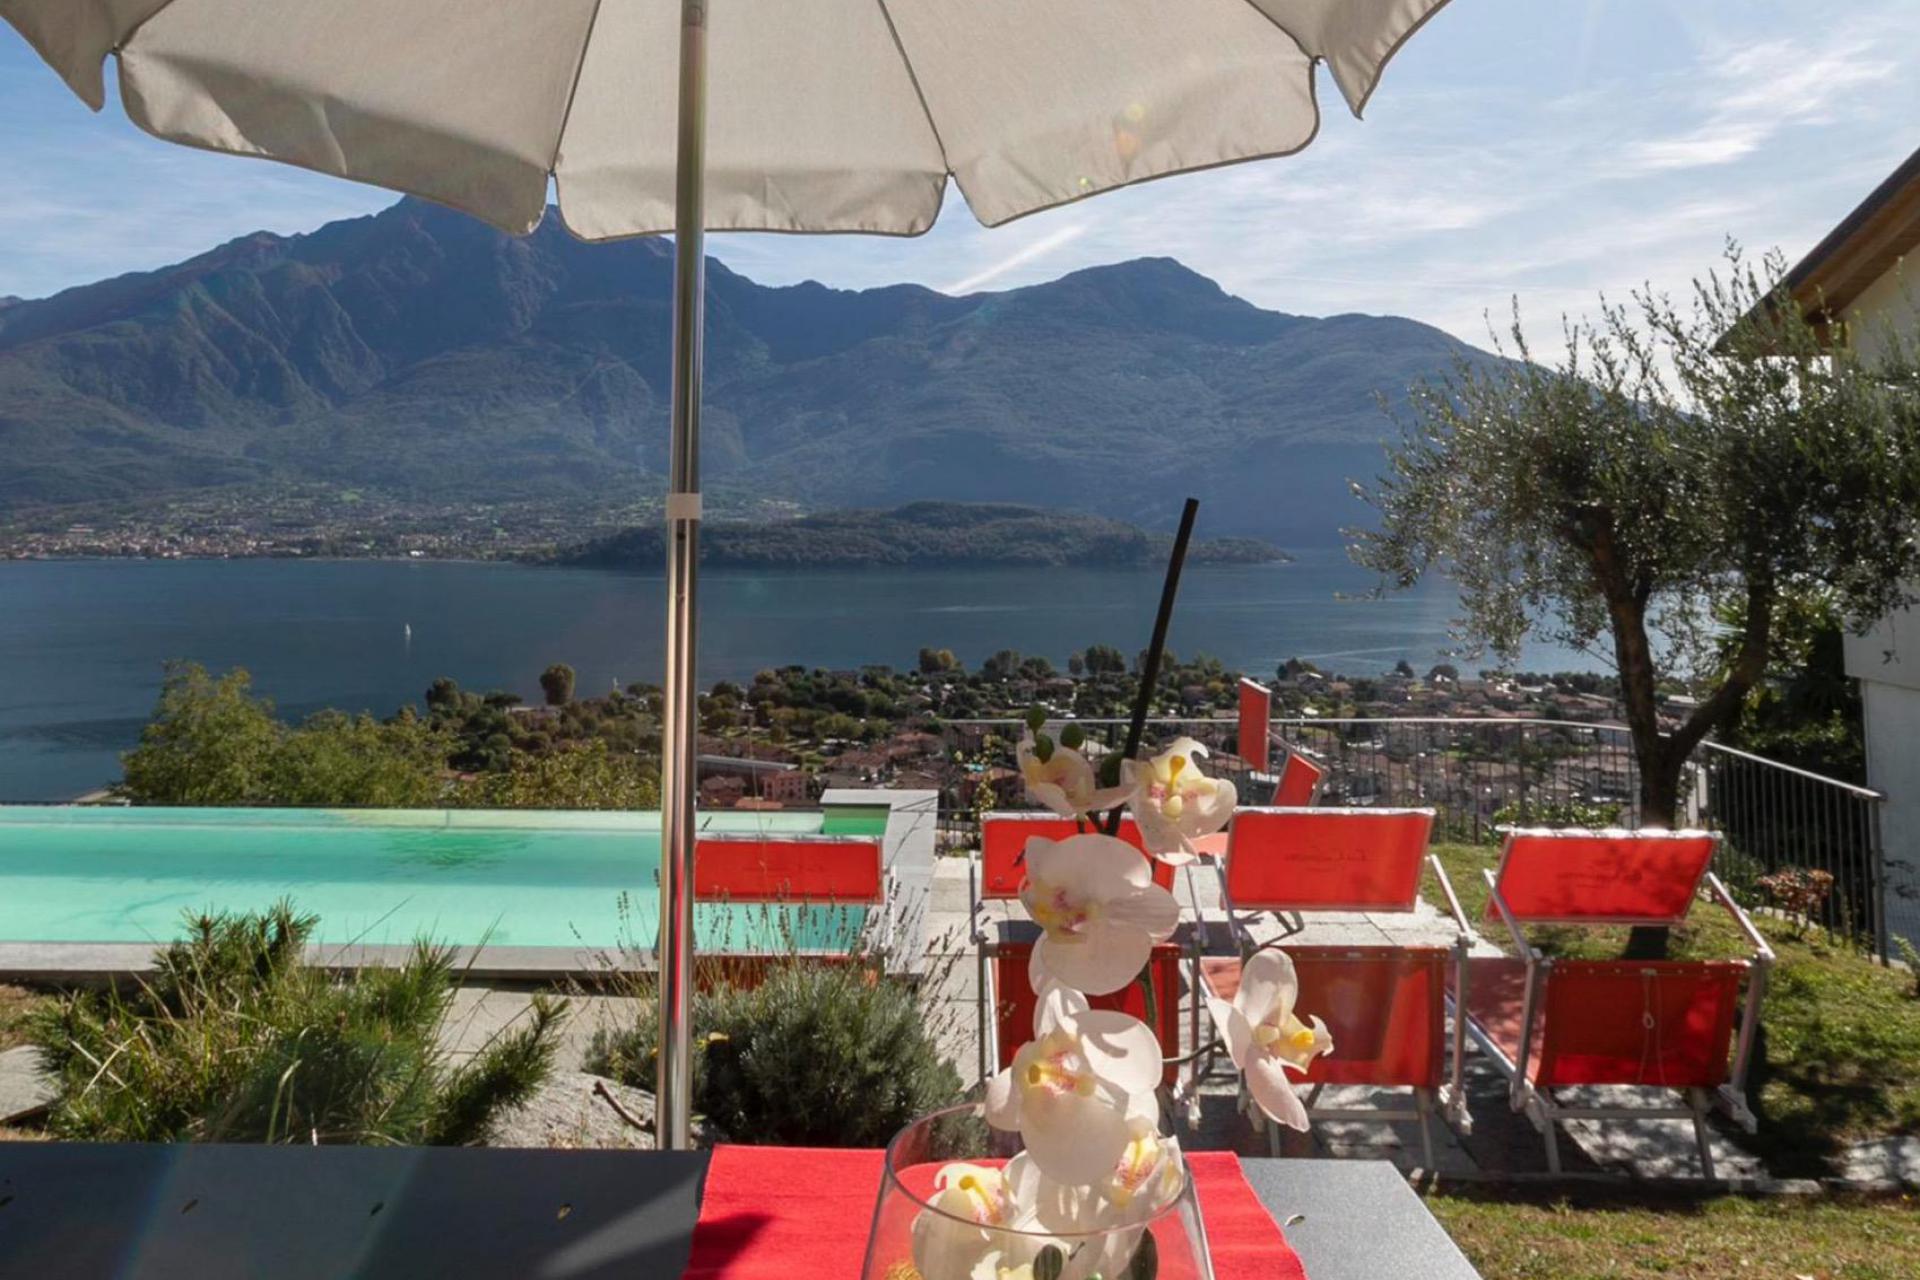 Agriturismo Lago di Como e lago di Garda Residence con vista unica sul Lago di Como